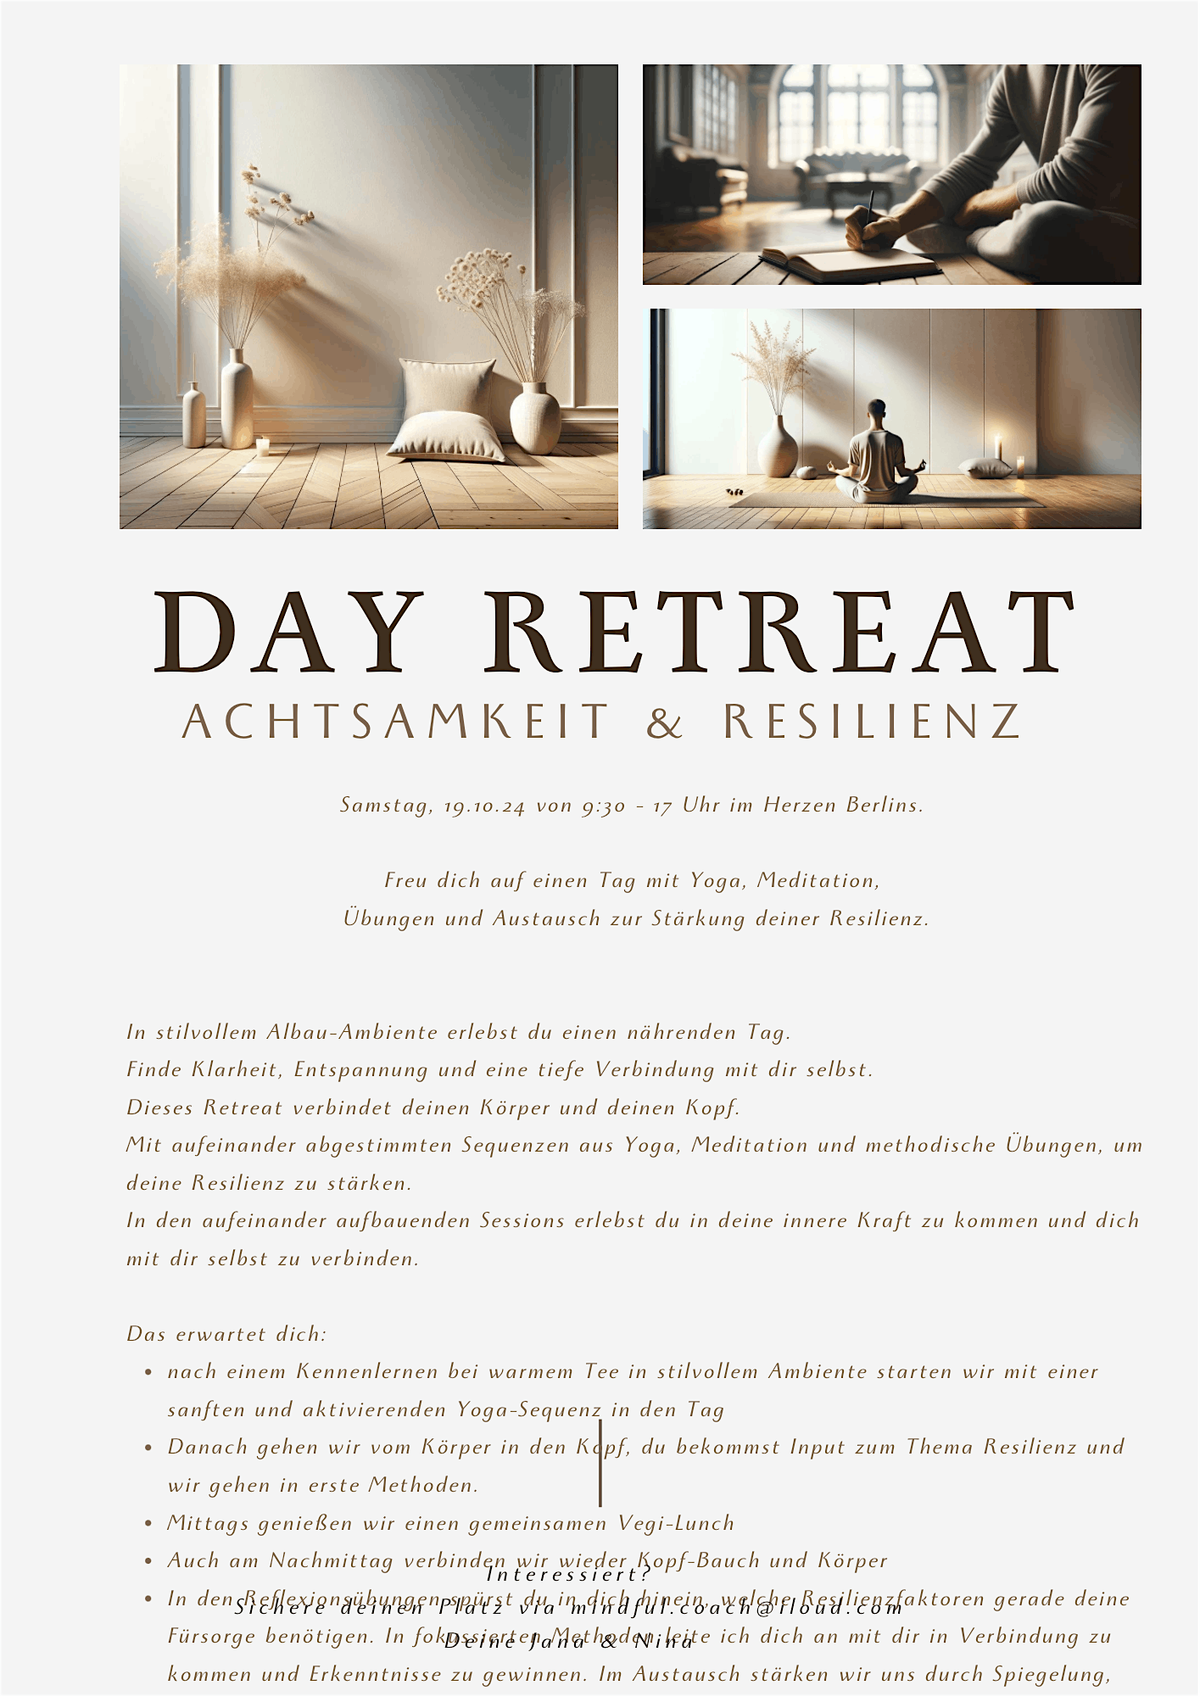 Day Retreat Resilienz & Achtsamkeit